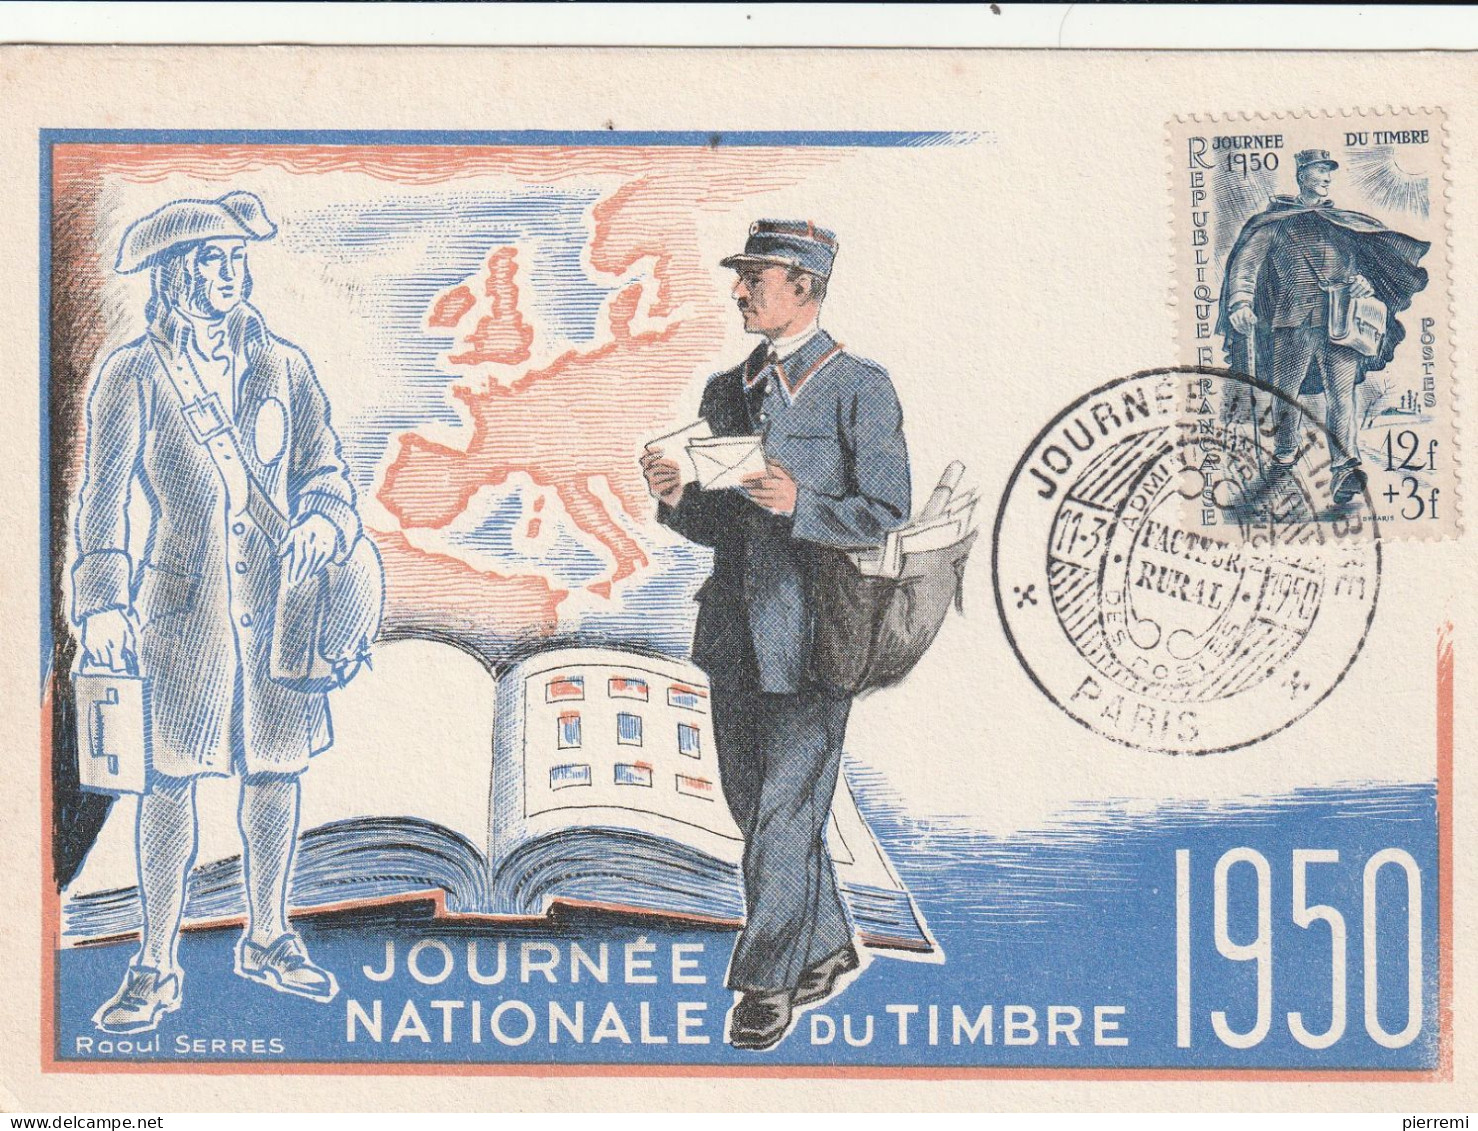 Journee Nationale Du Timbre 1950 - Postal Services